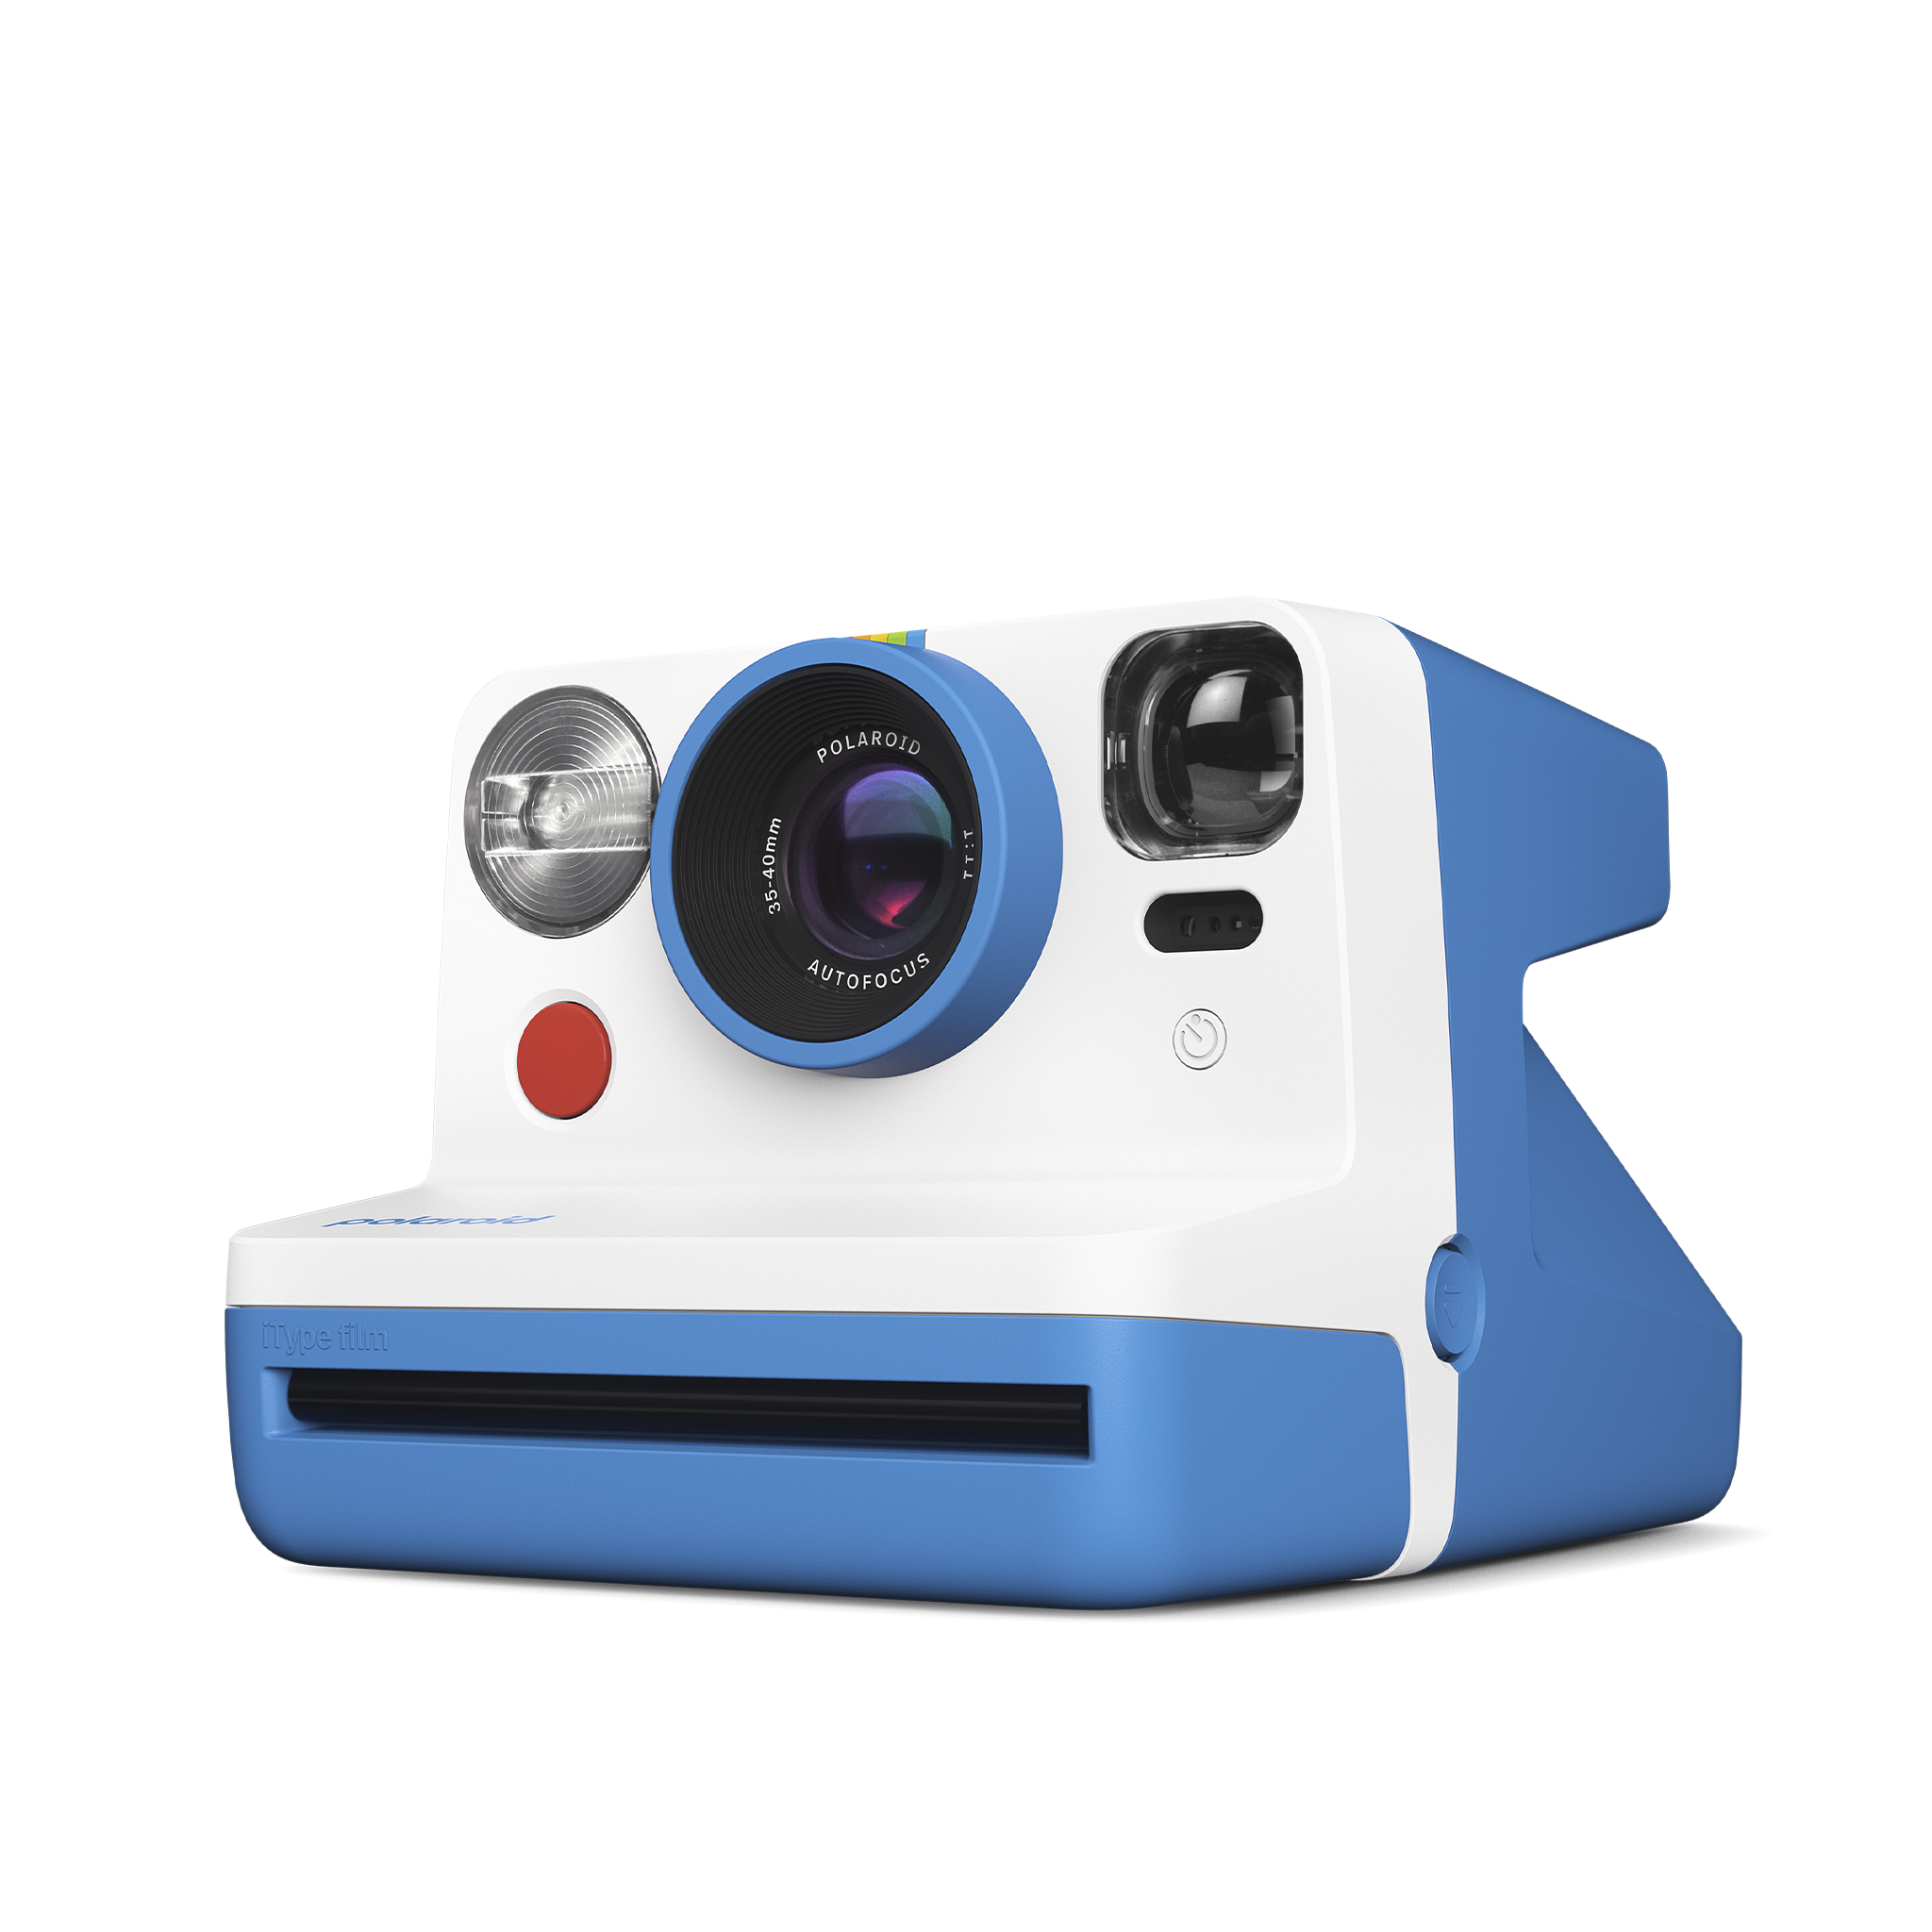 Shop Polaroid Now Generation 2 i-Type Instant Camera | Polaroid US